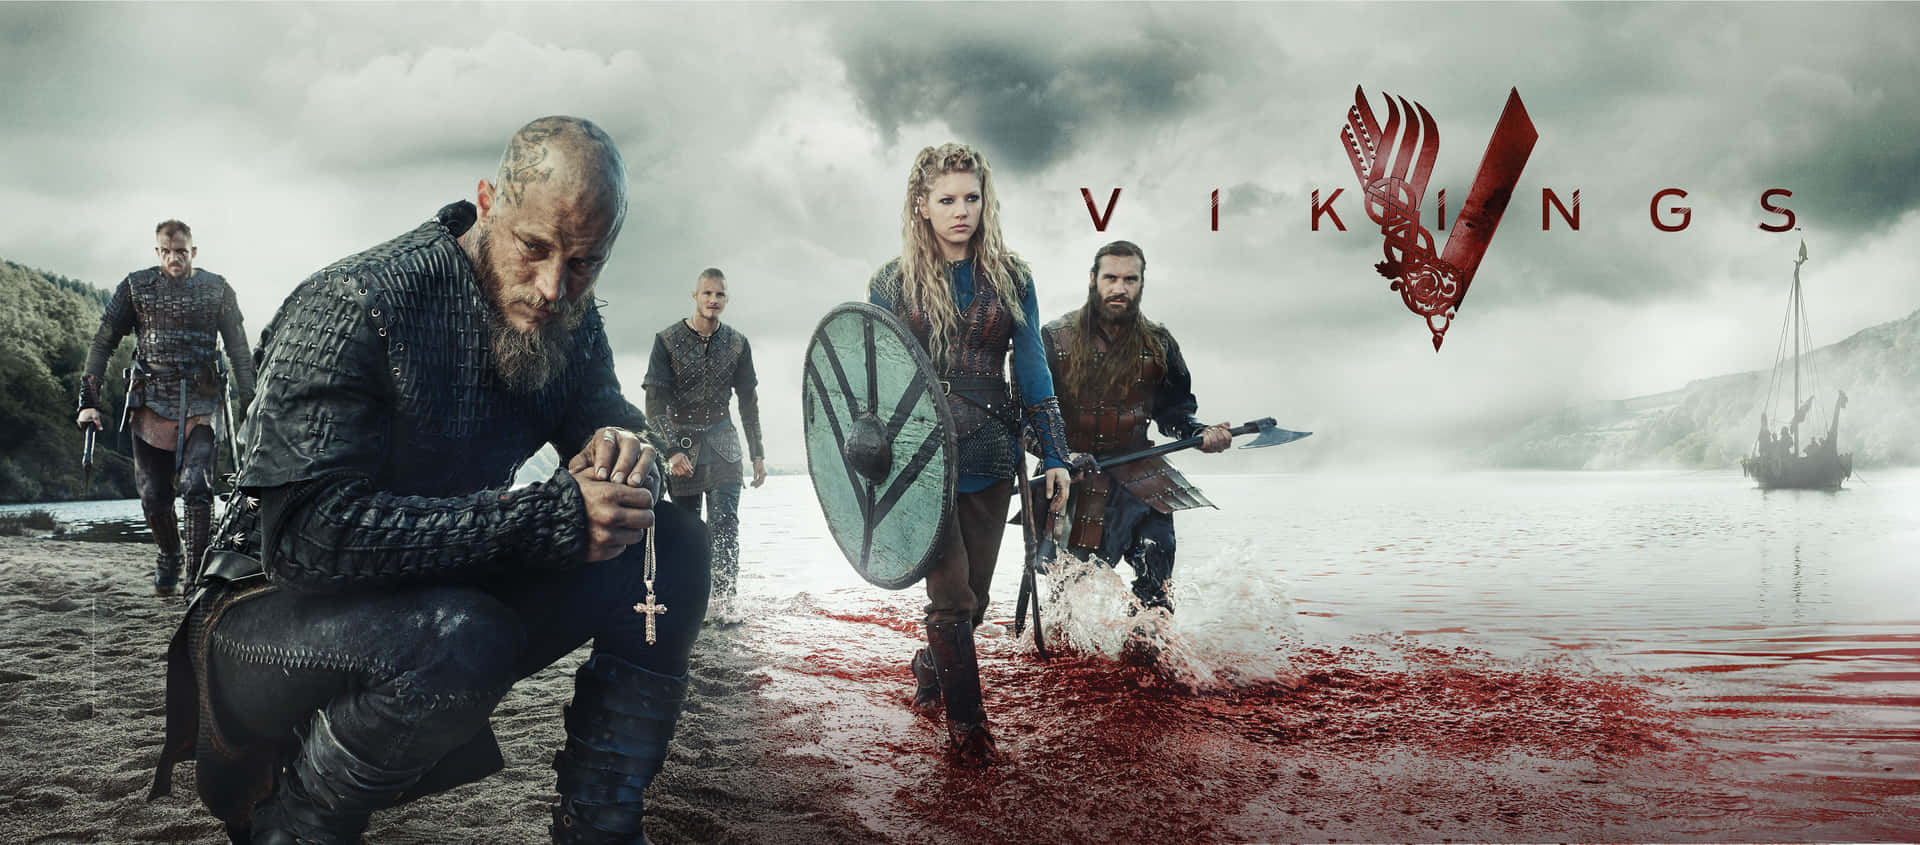 Brave Viking Warrior